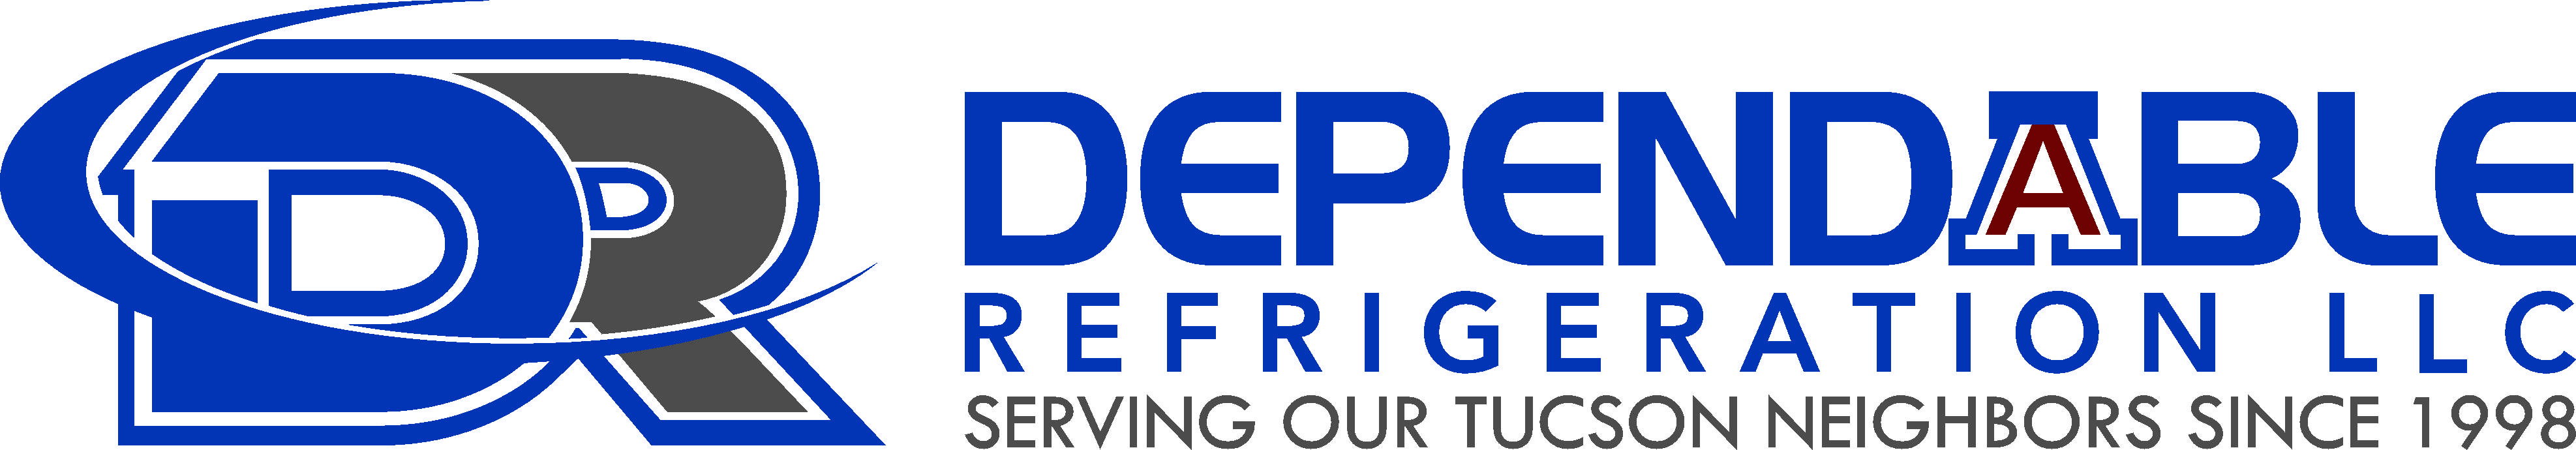 Dependable Refrigeration LLC's Logo